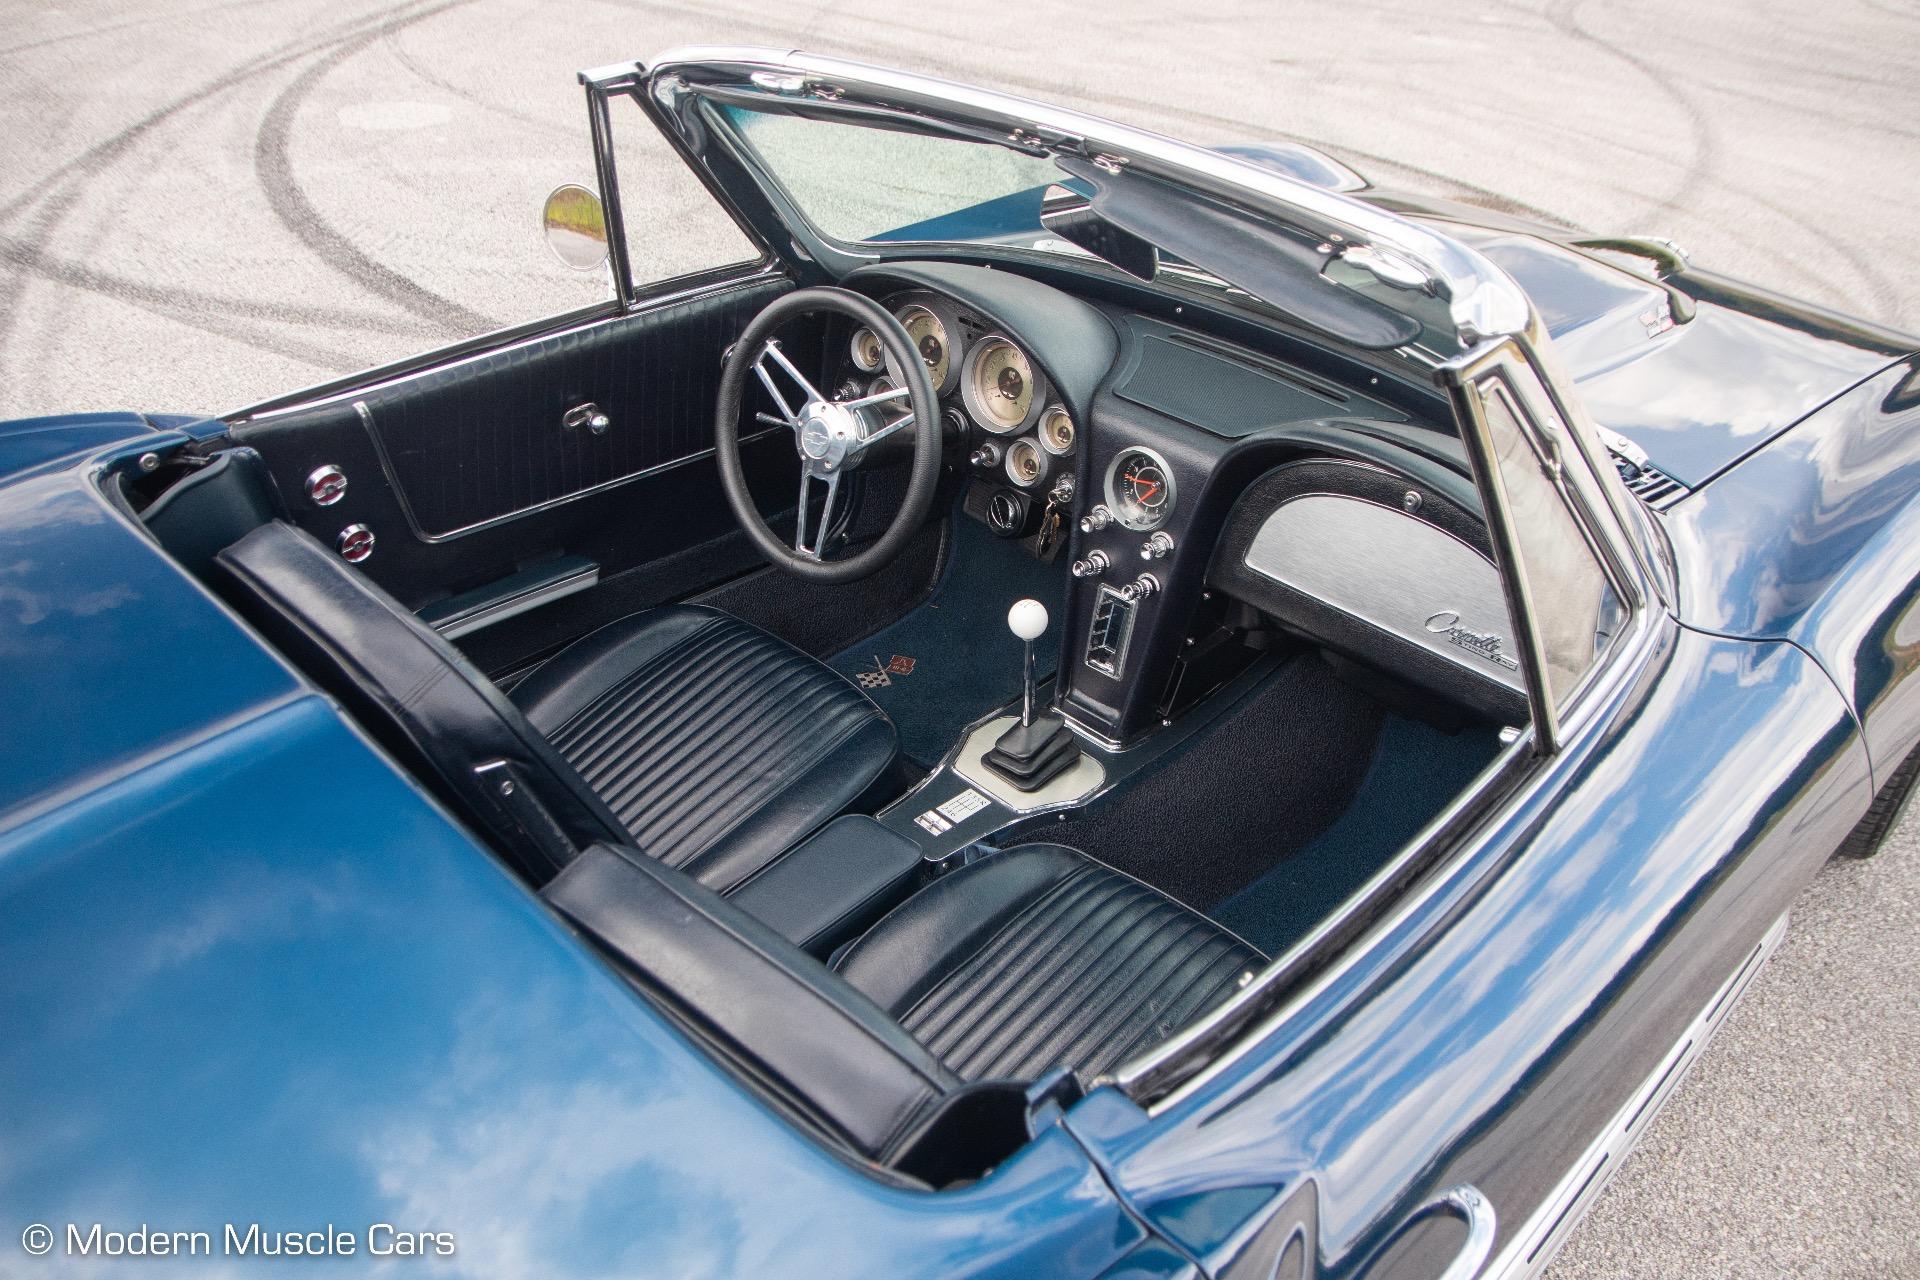 1964 Chevrolet Corvette Stingray Convertible - $155,900